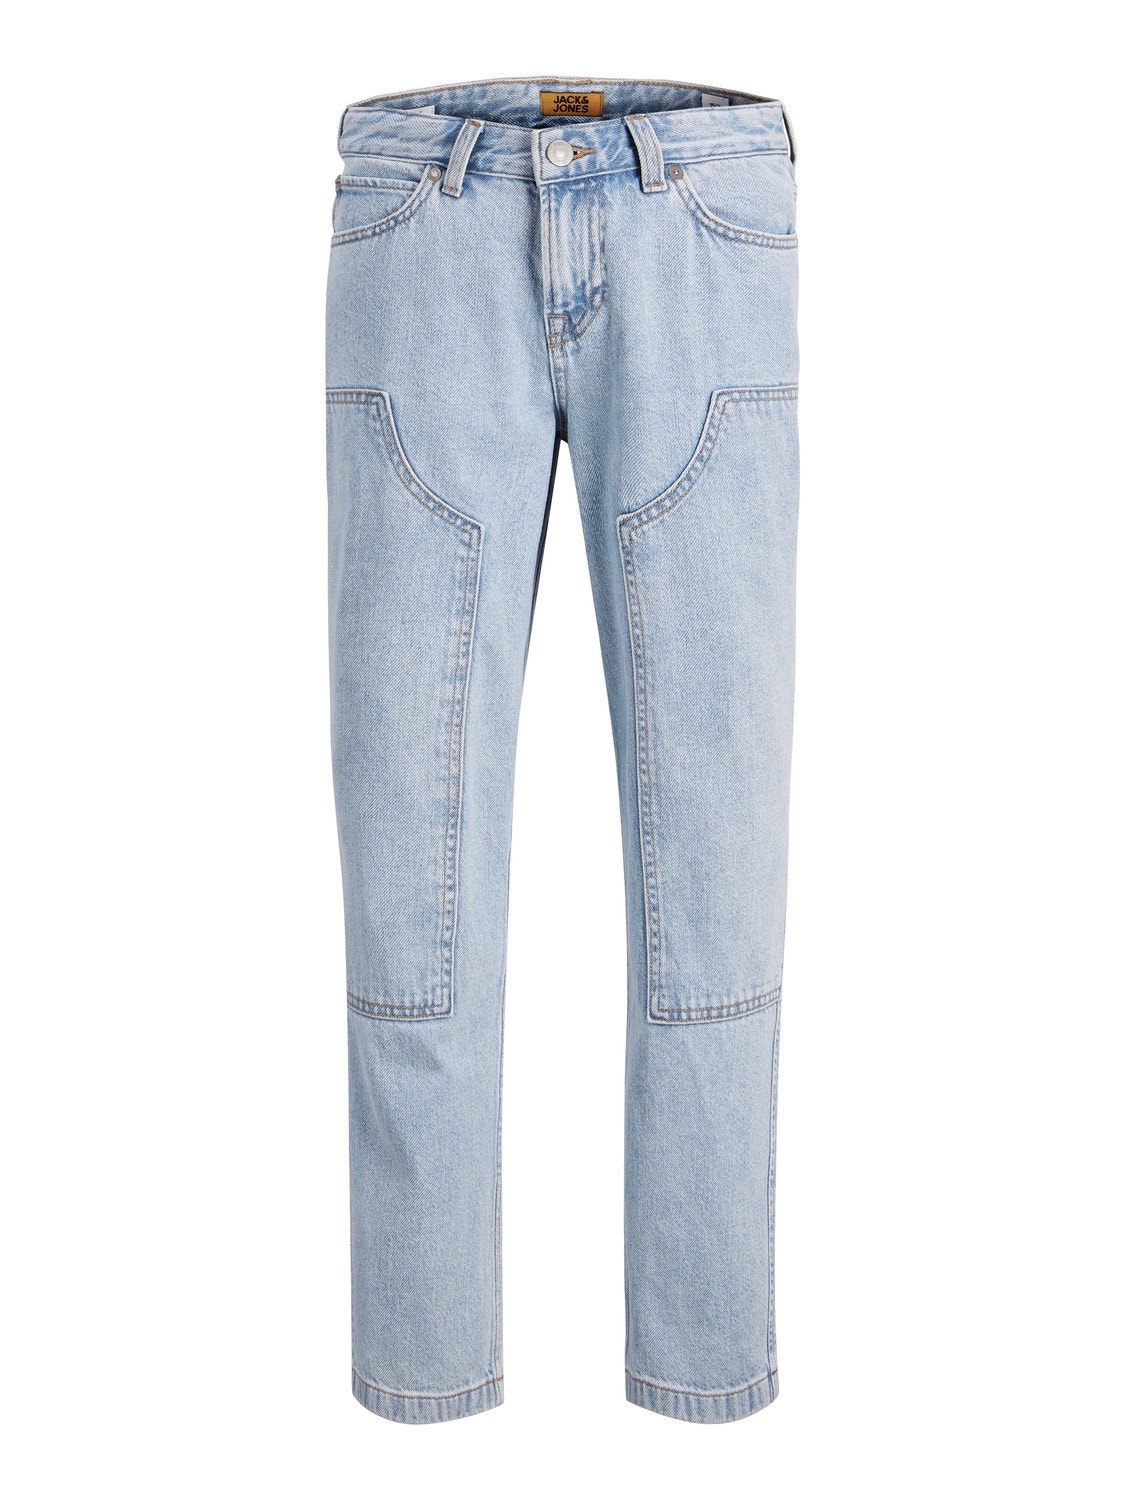 Jack & Jones JJICHRIS JJPAINTER MF 491 Relaxed Fit Jeans Für jungs -Blue Denim - 12258378